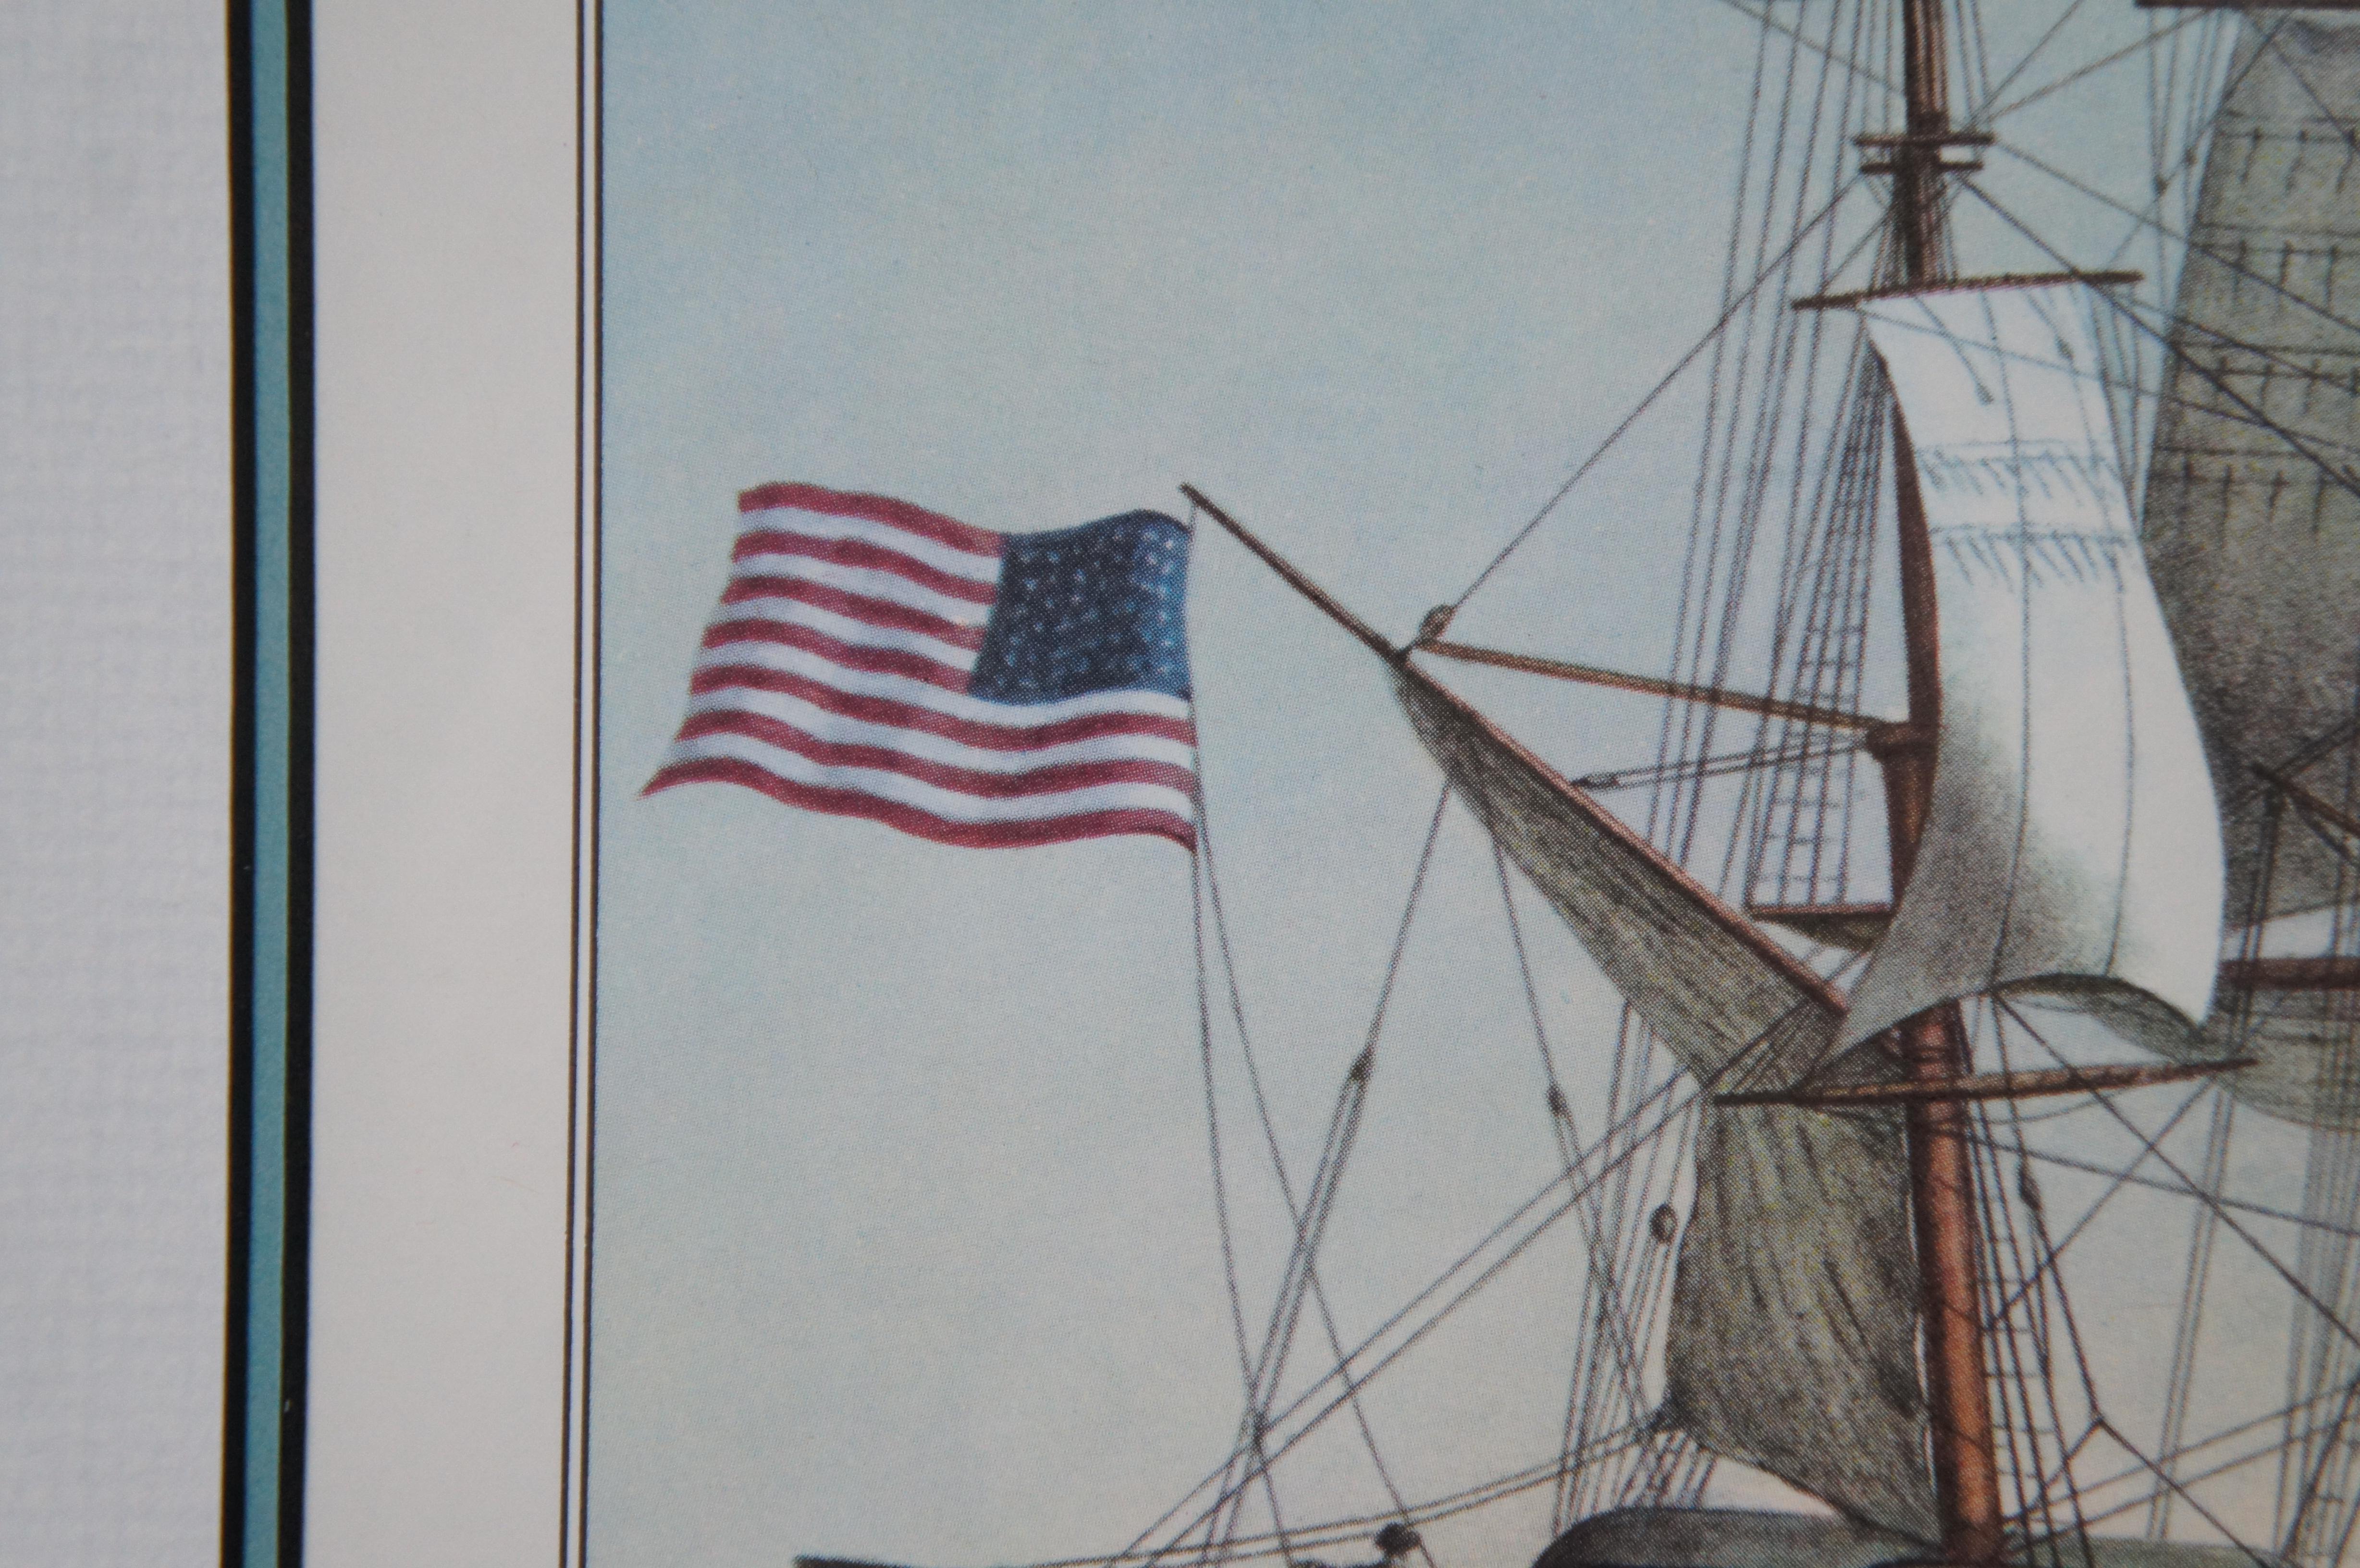 Currier & Ives American Whaler Nautical Maritime Fishing Ship Print 21